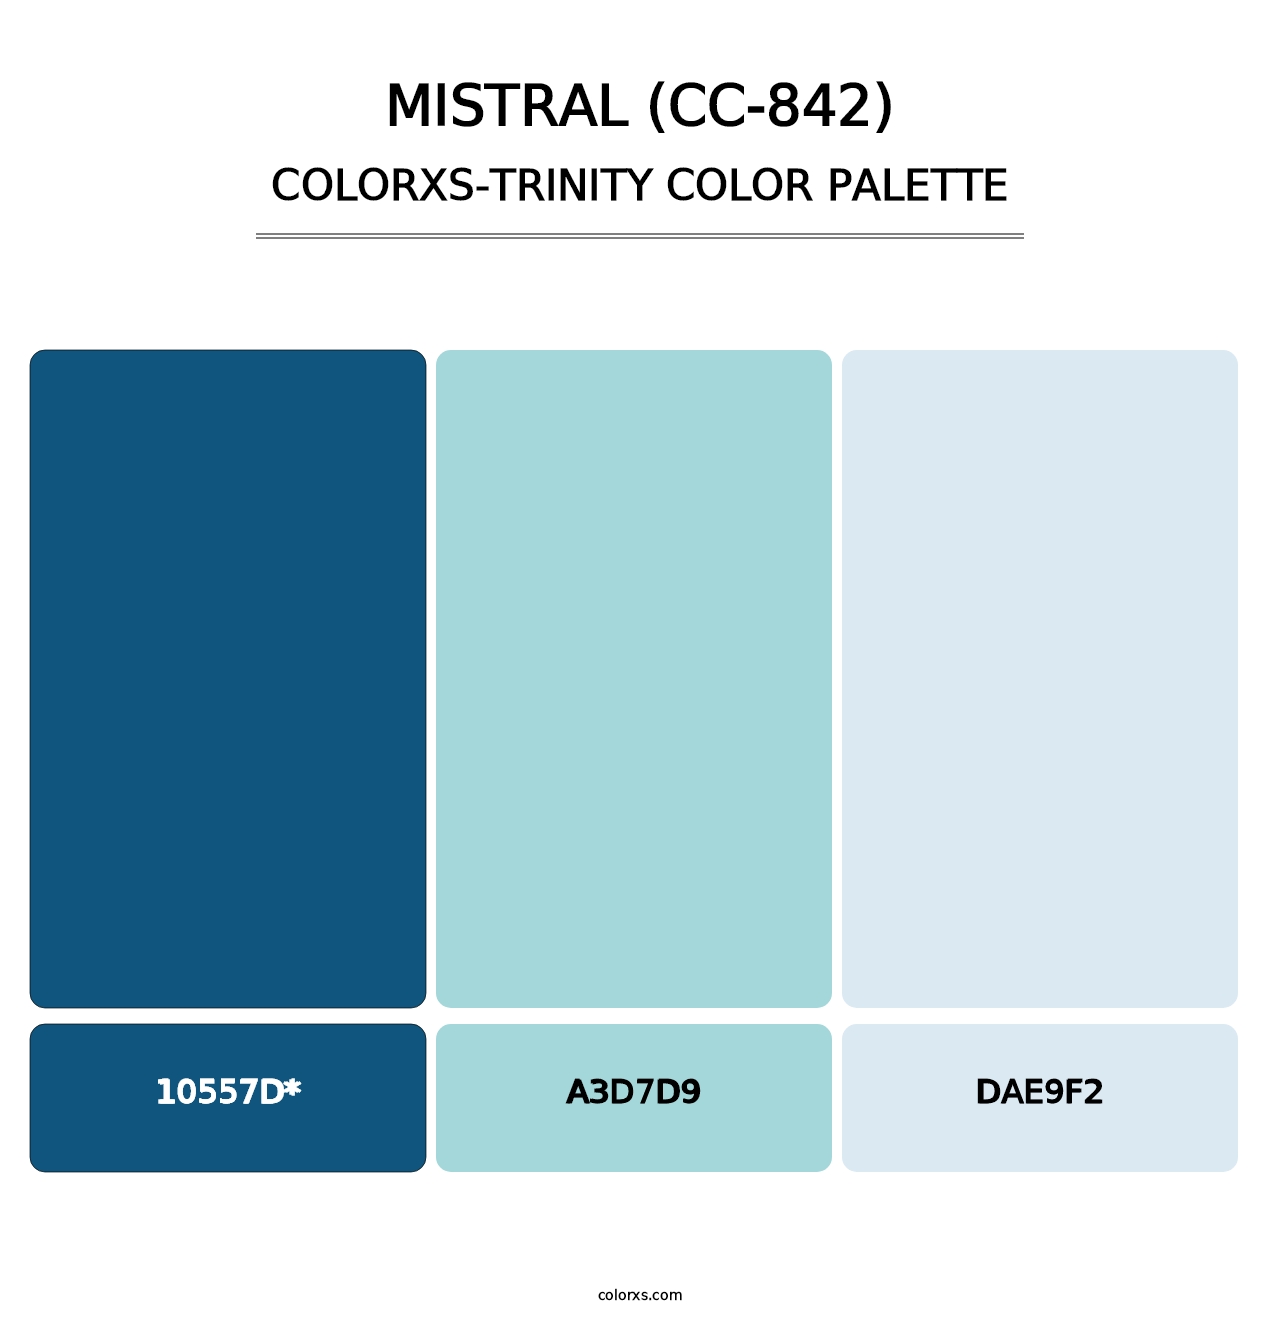 Mistral (CC-842) - Colorxs Trinity Palette